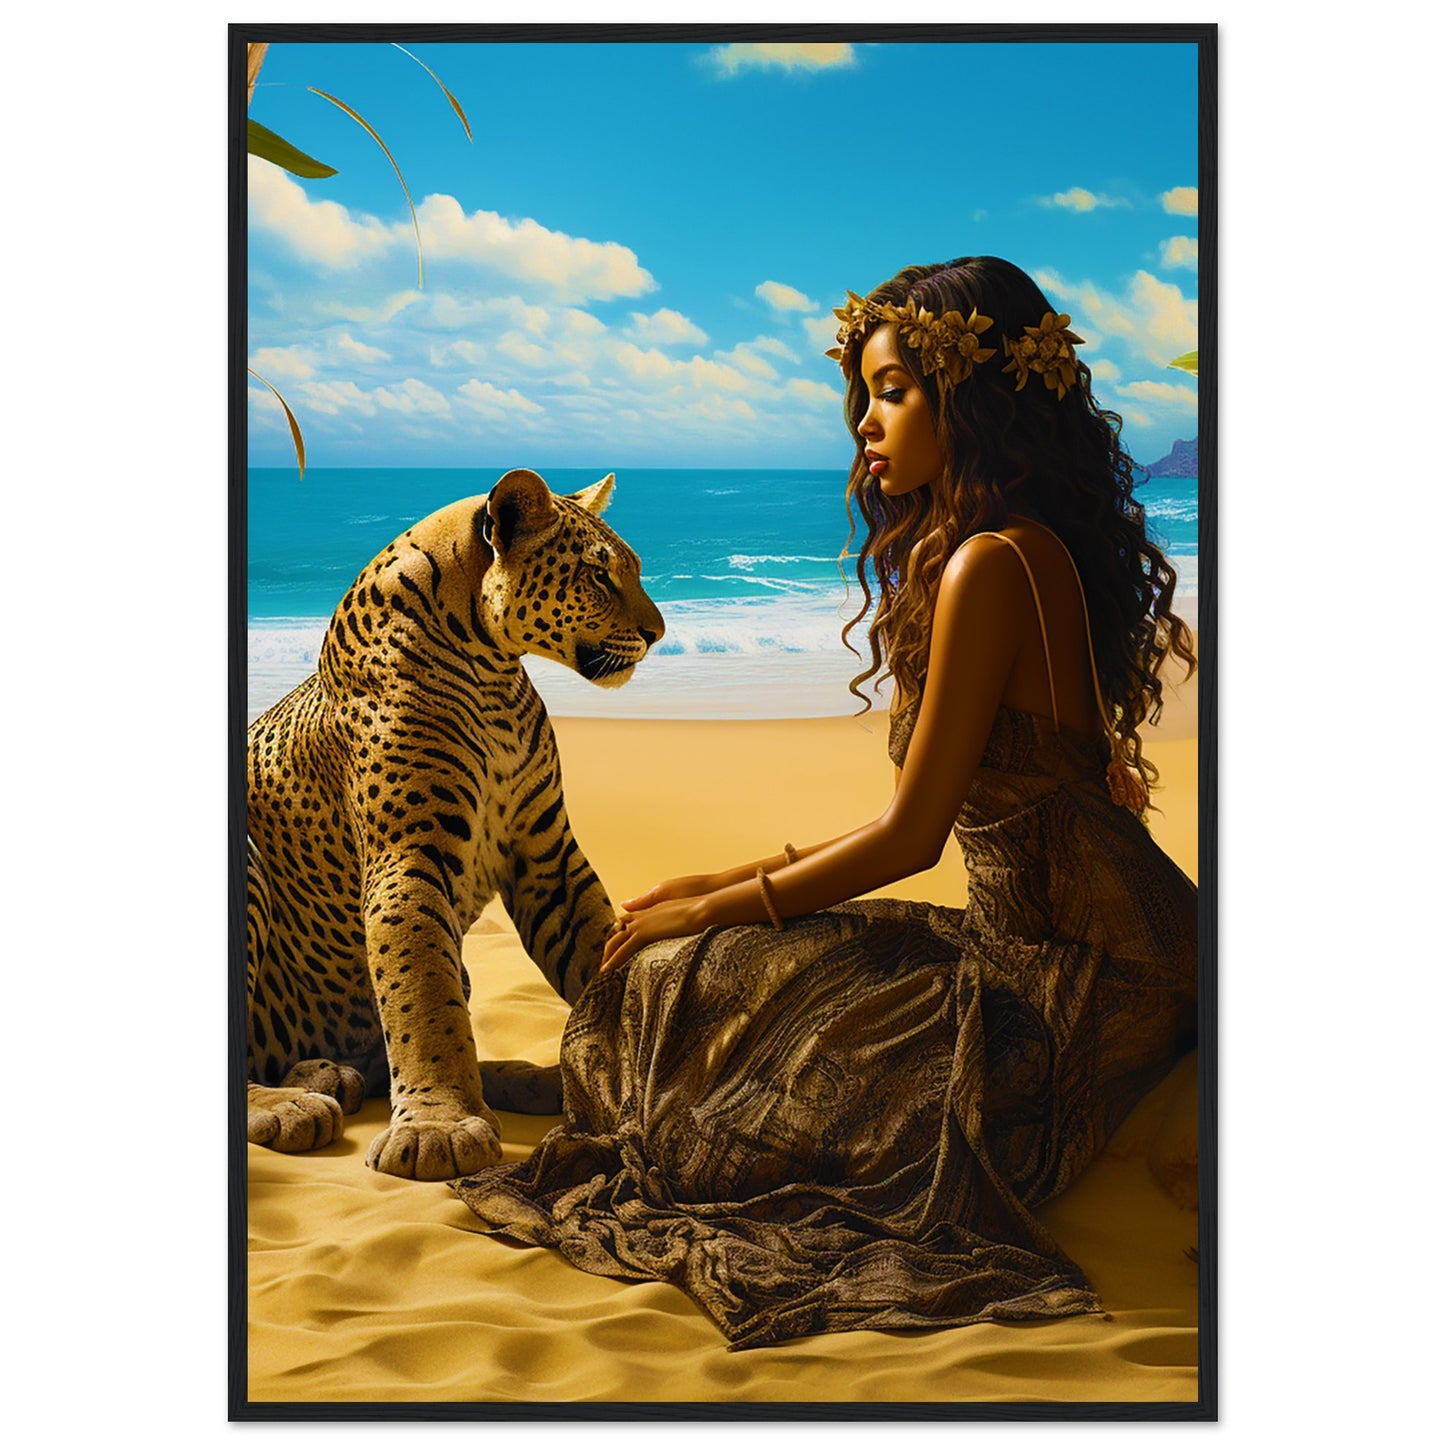 Seychelle Serenity: Golden Sand The Maiden and the LeopardPremium Semi-Glossy Paper Wooden Framed Poster